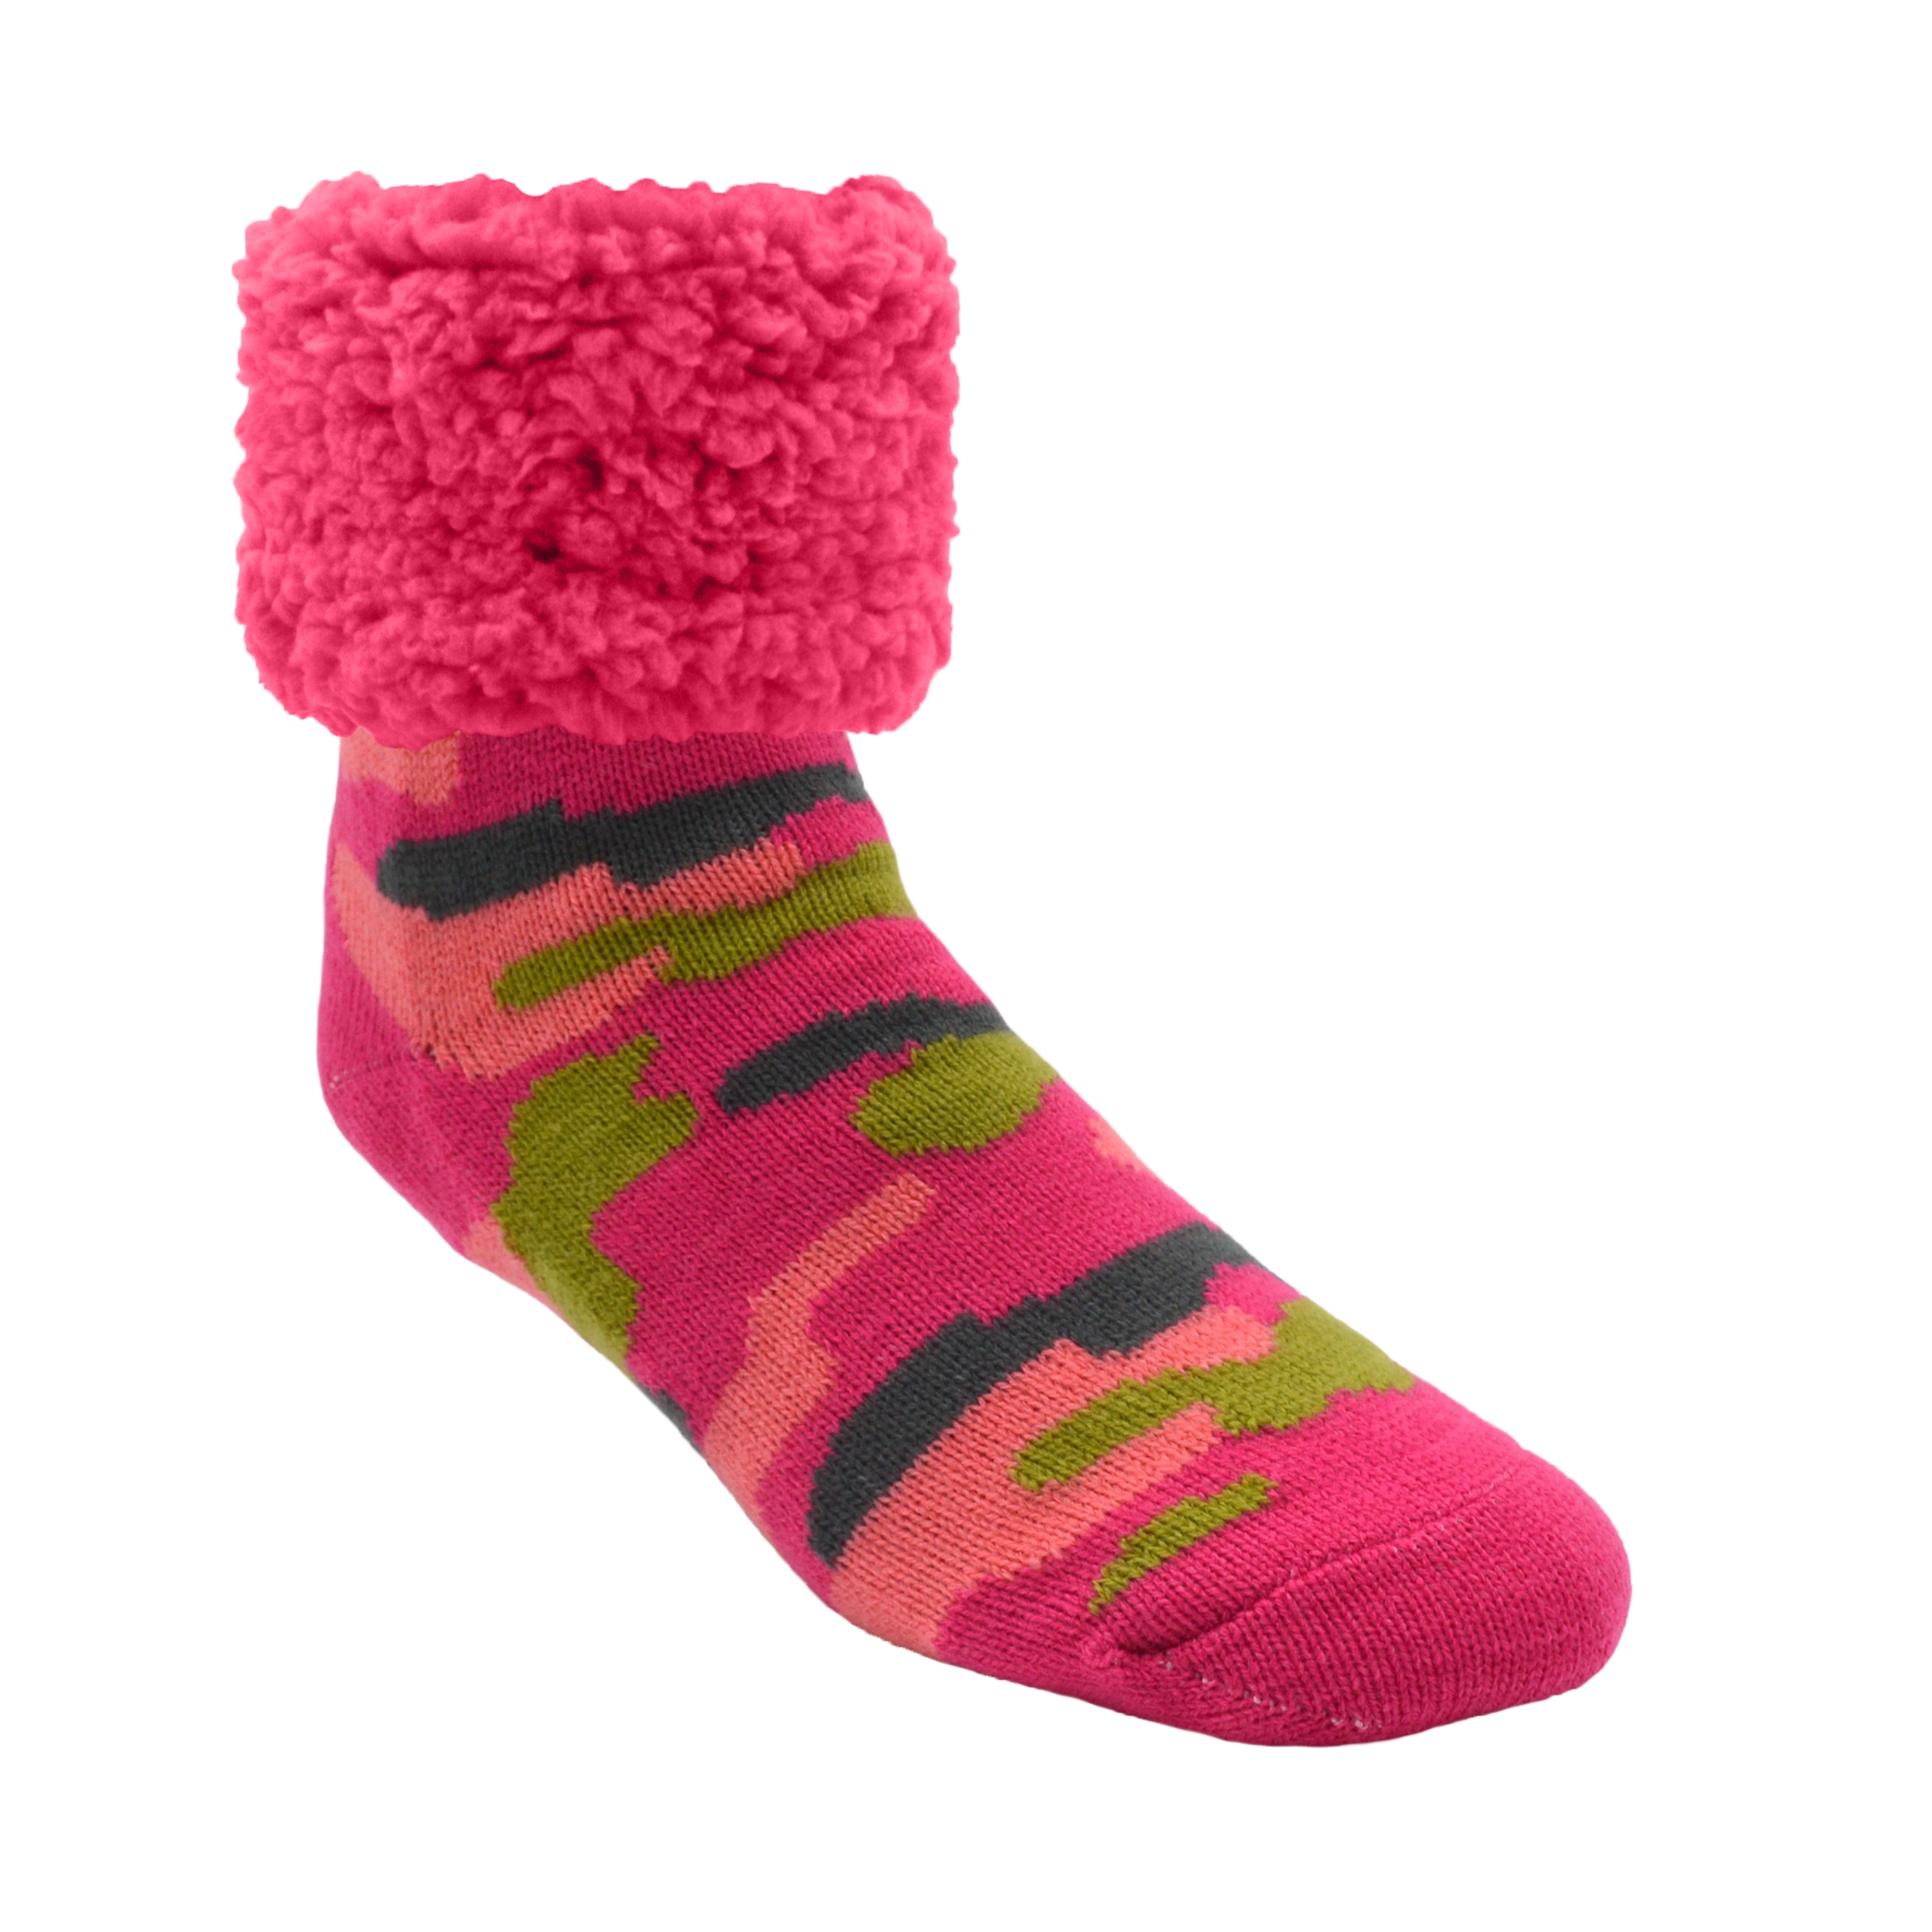 Bright Classic Slipper Socks  Camo Pink – Pudus™ Lifestyle Co.